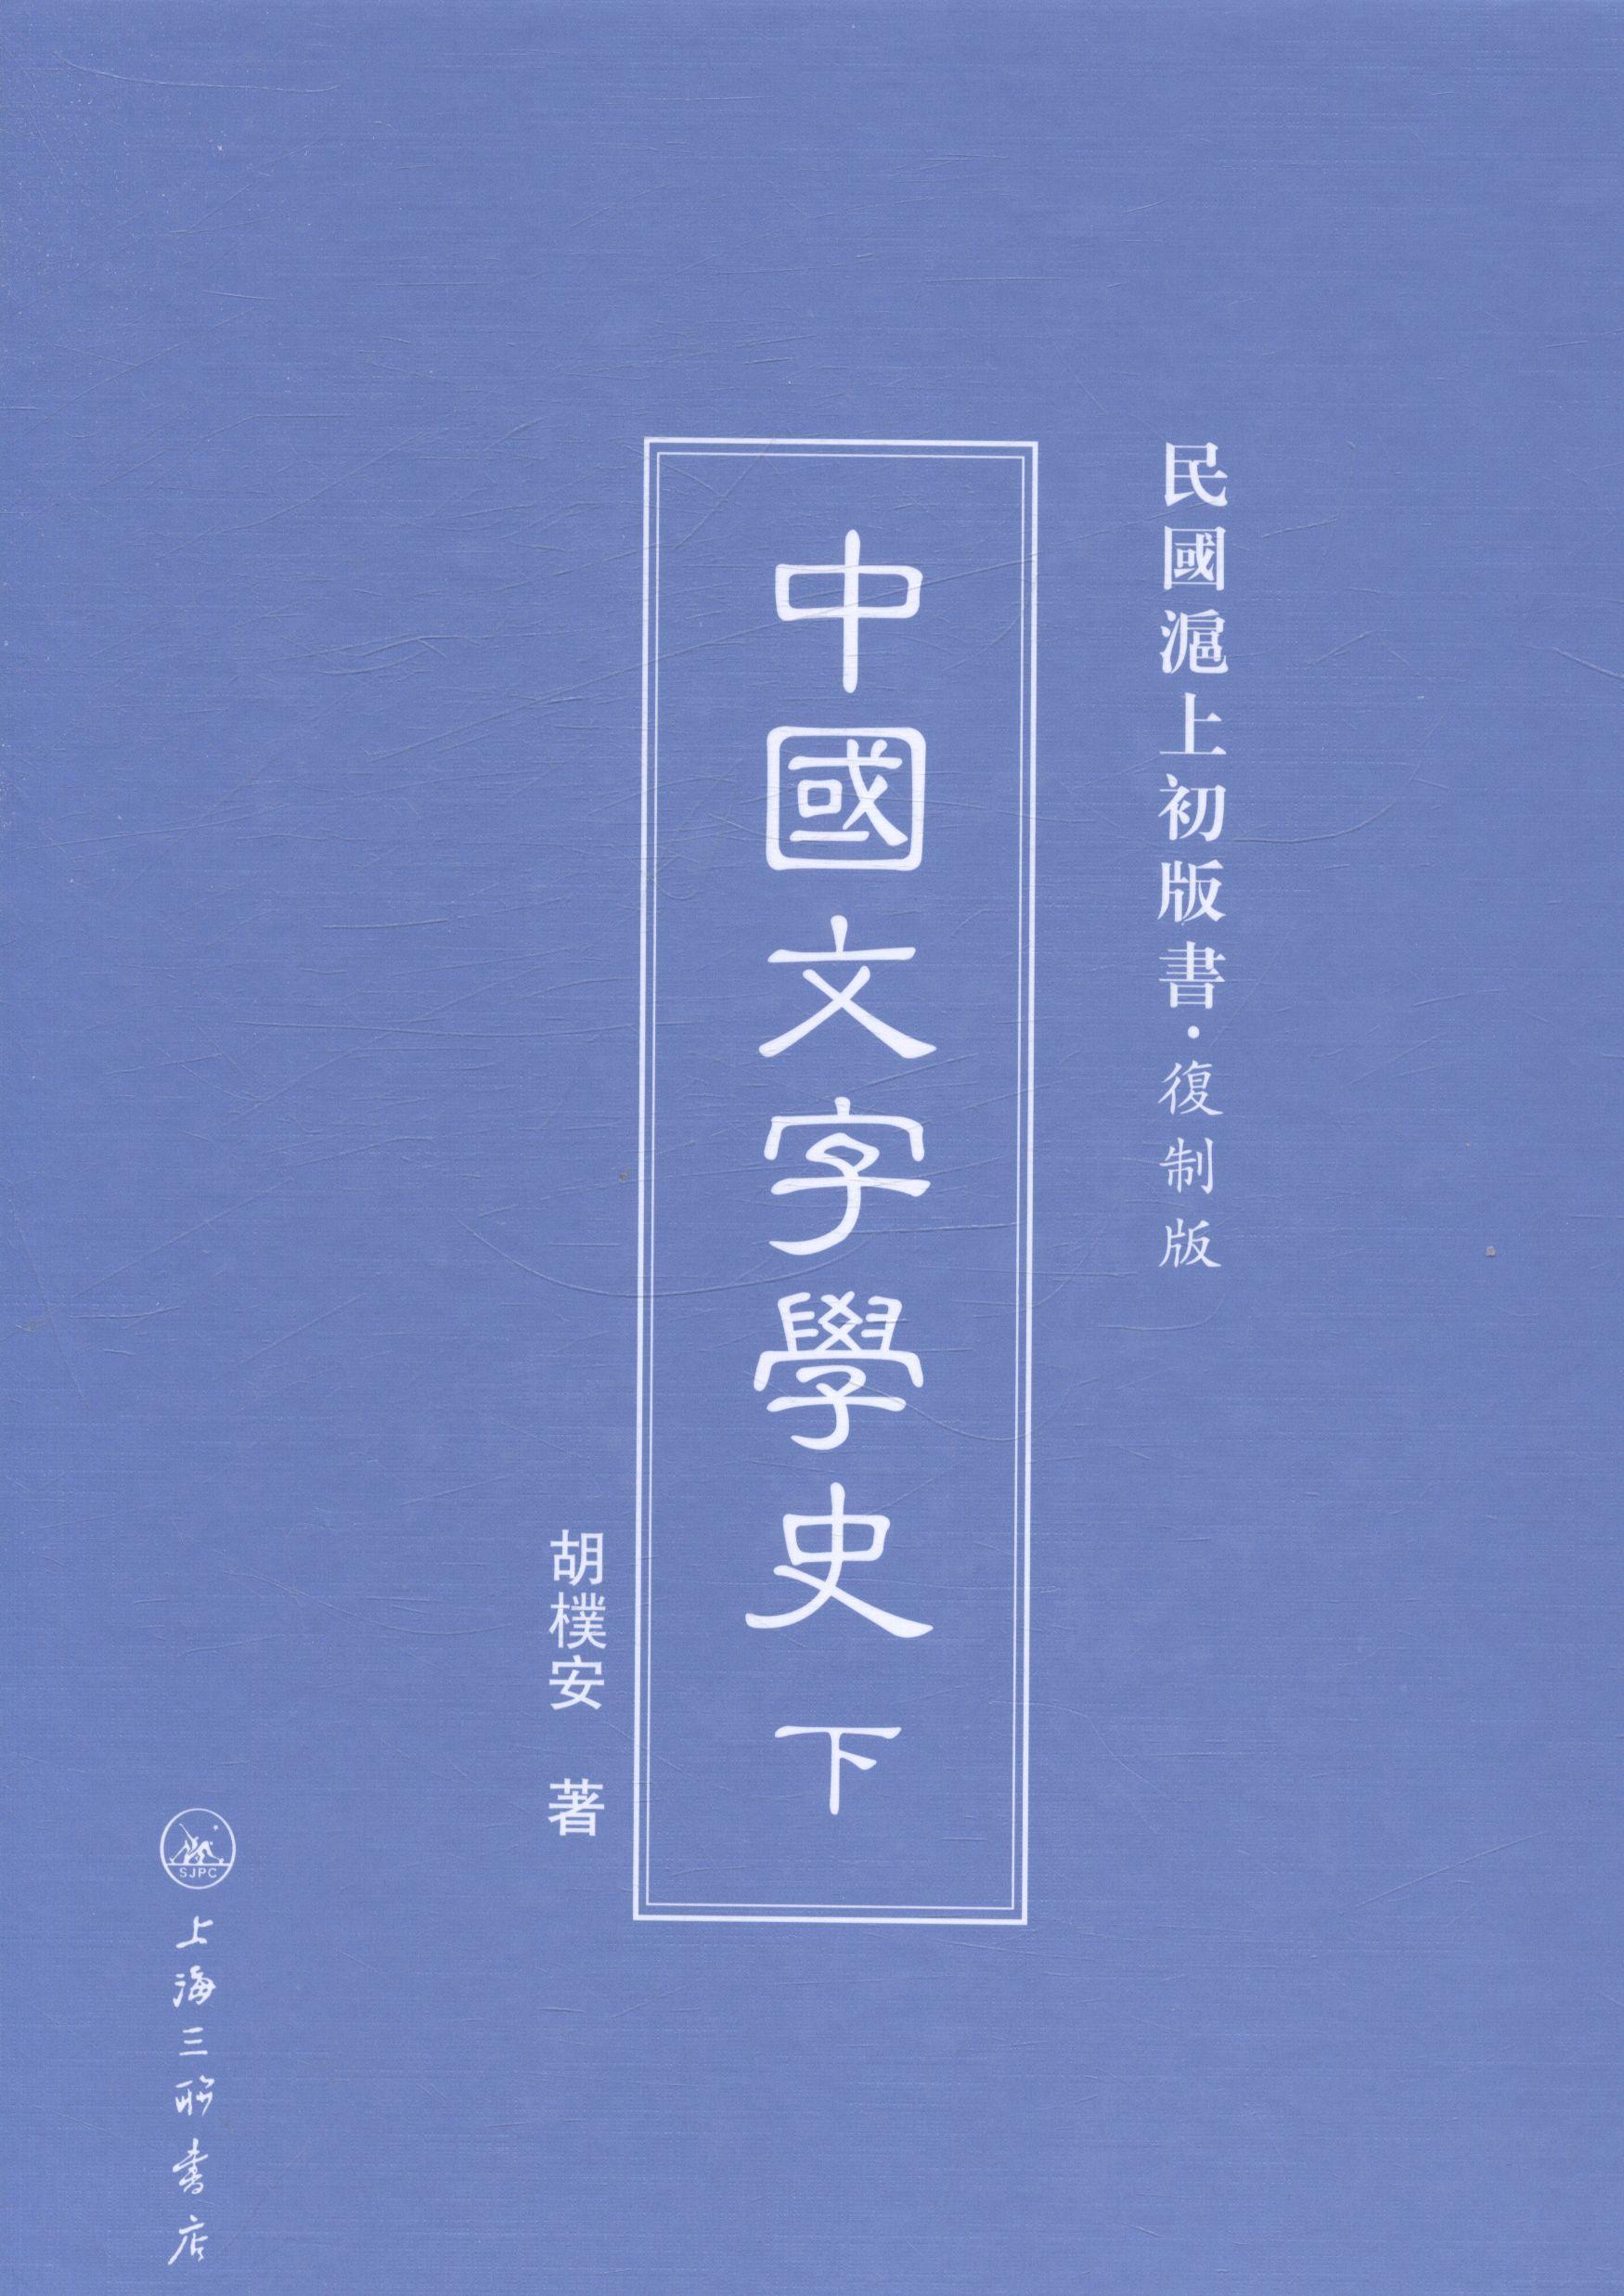 [rt] 中国文字学史  胡朴安  上海三联书店  外语  汉字文字学汉语史